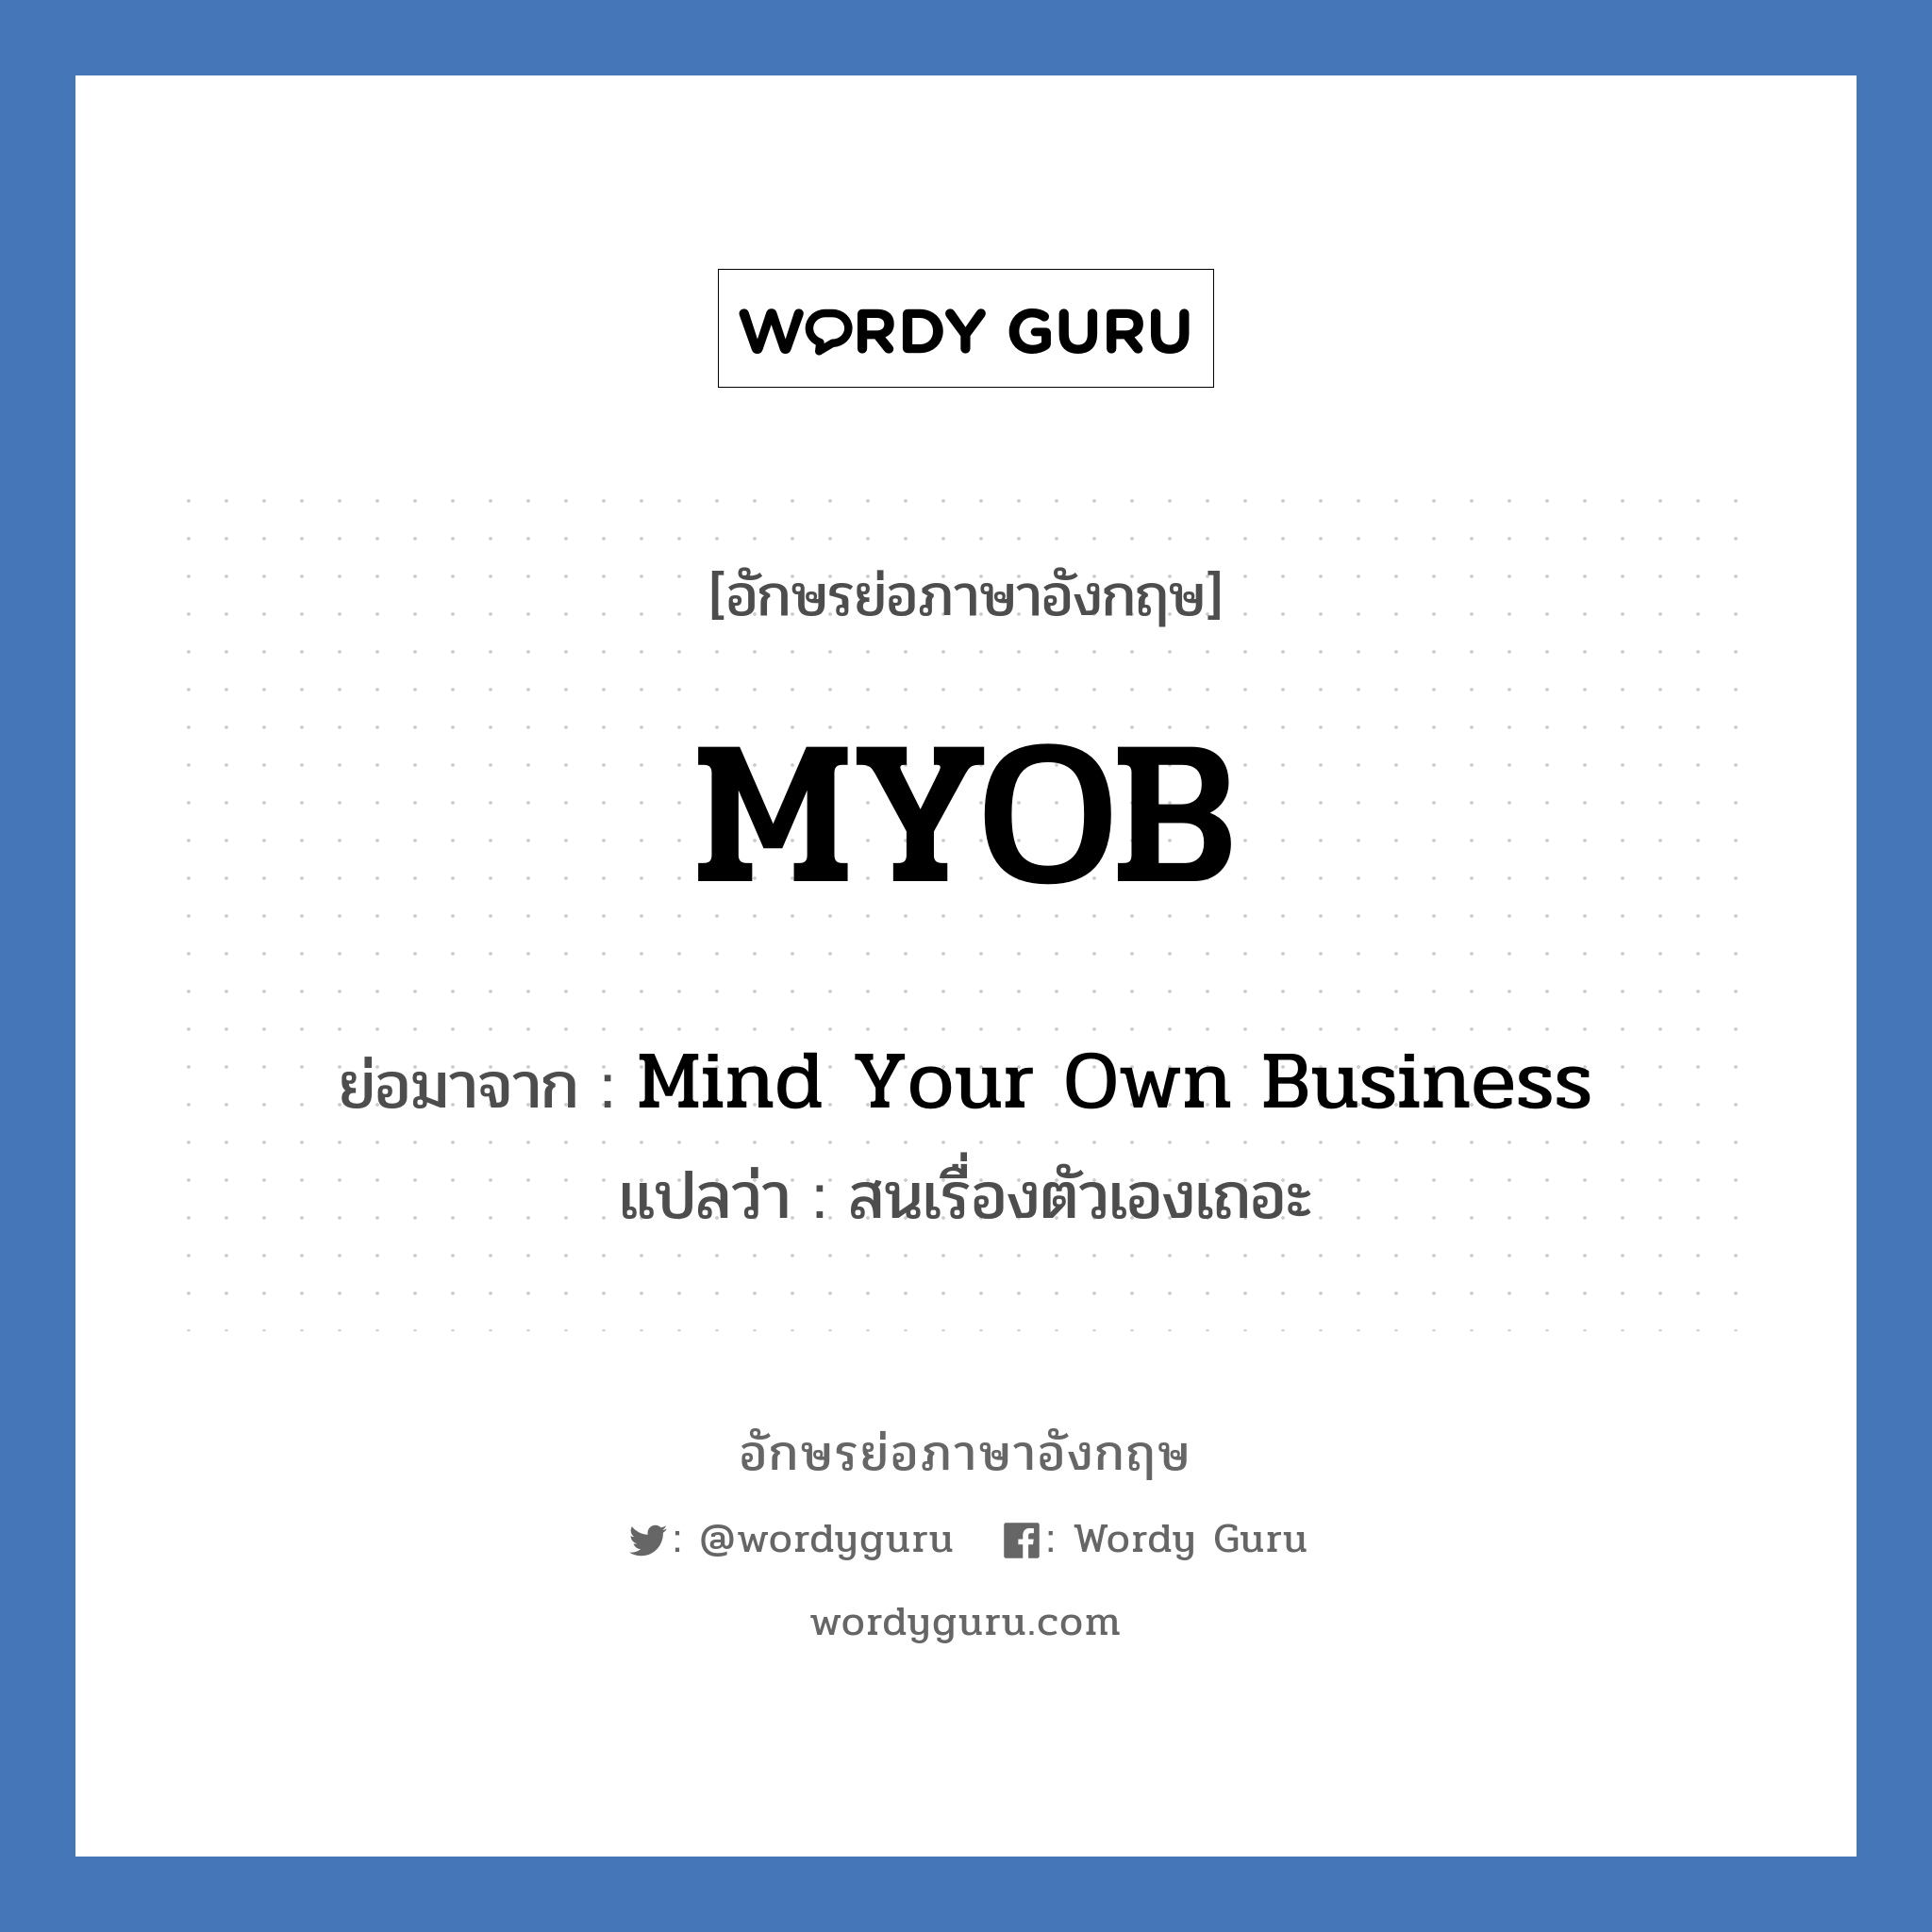 Mind Your Own Business คำย่อคือ? แปลว่า?, อักษรย่อภาษาอังกฤษ Mind Your Own Business ย่อมาจาก MYOB แปลว่า สนเรื่องตัวเองเถอะ